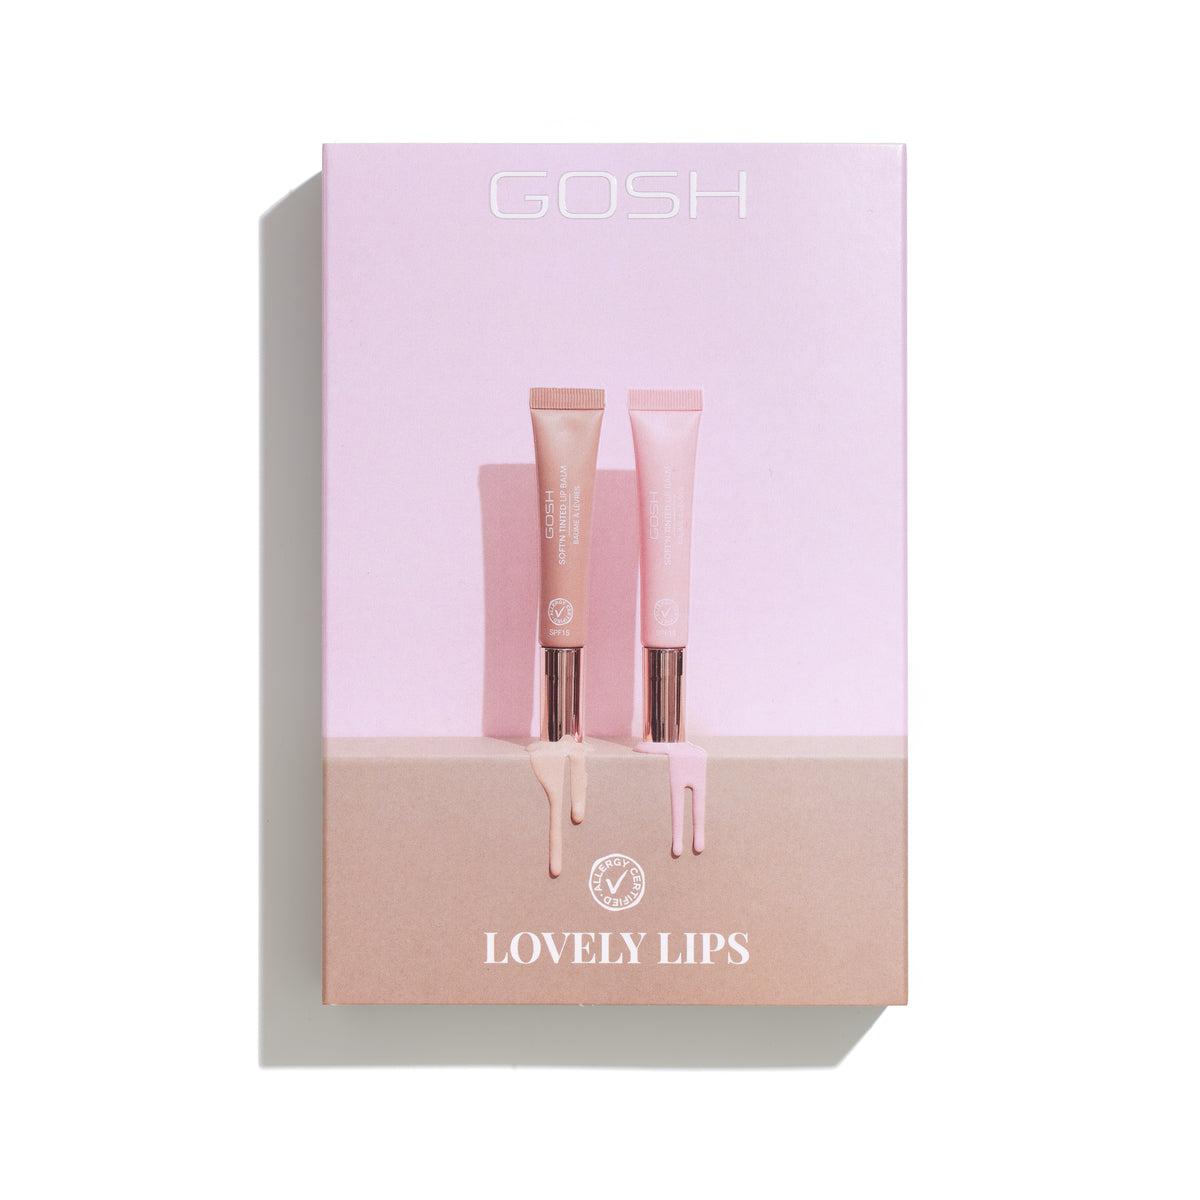 Gosh Lovely Lips Gift Box